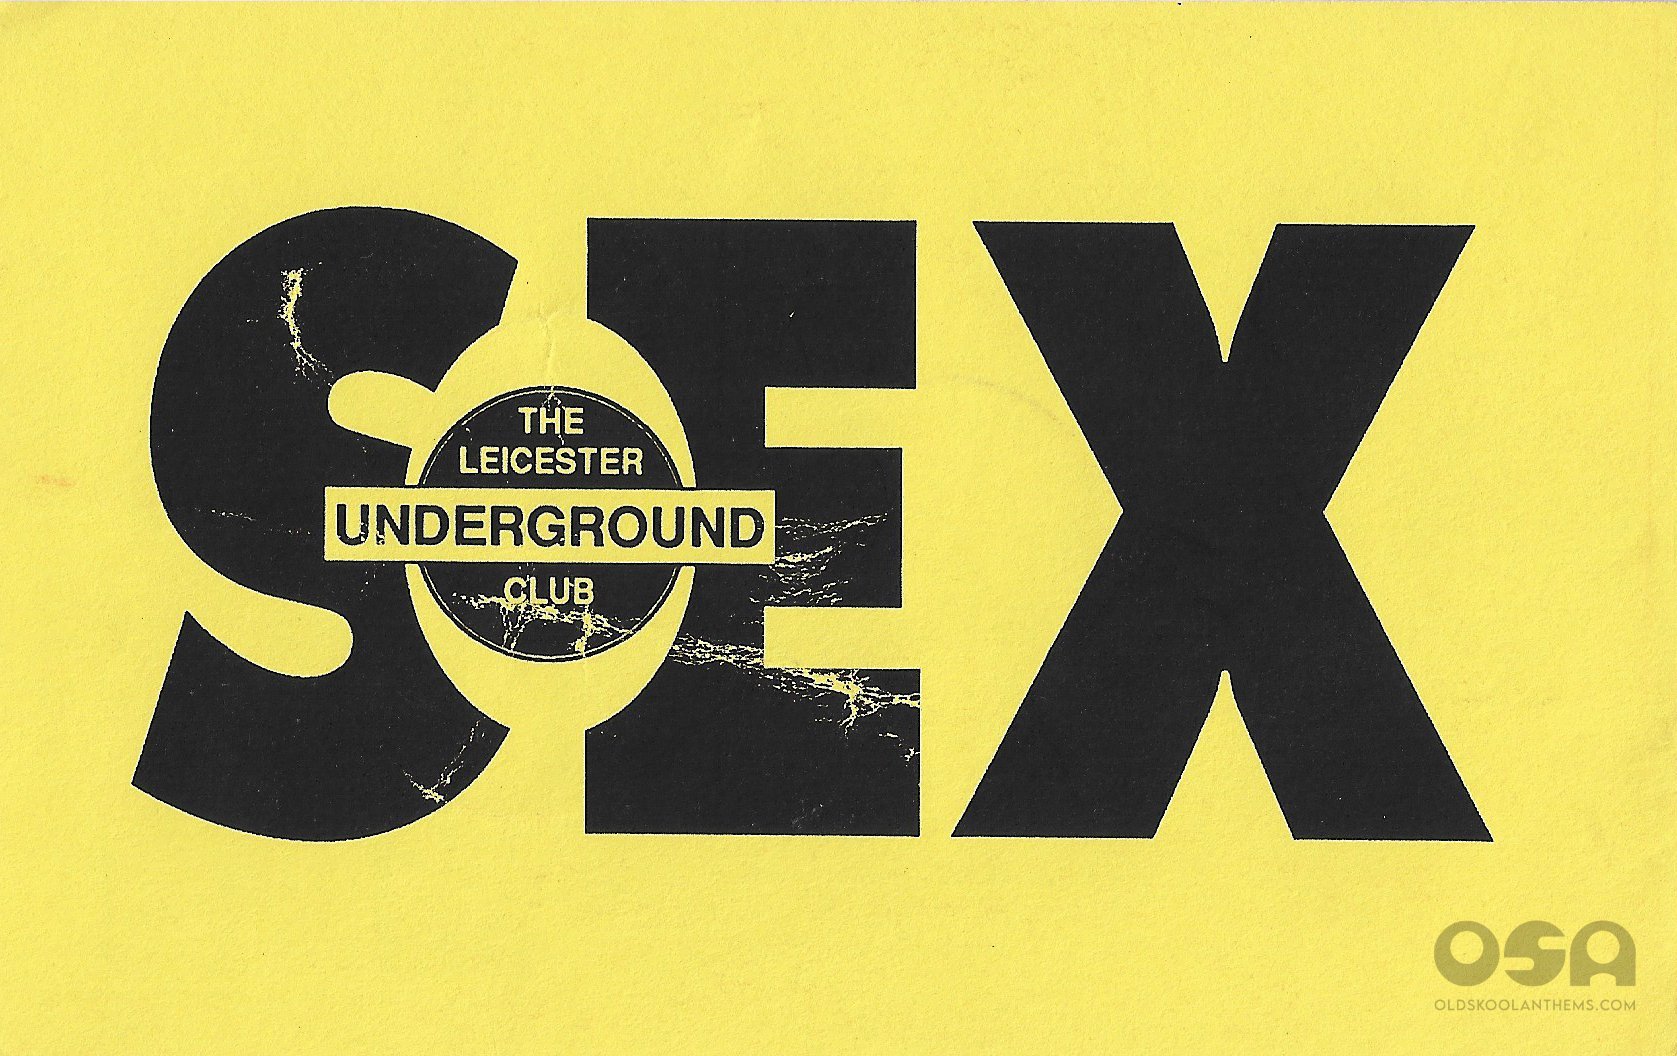 Sex @ The Leicester Underground Club - 23rd January 1993 - A .jpg